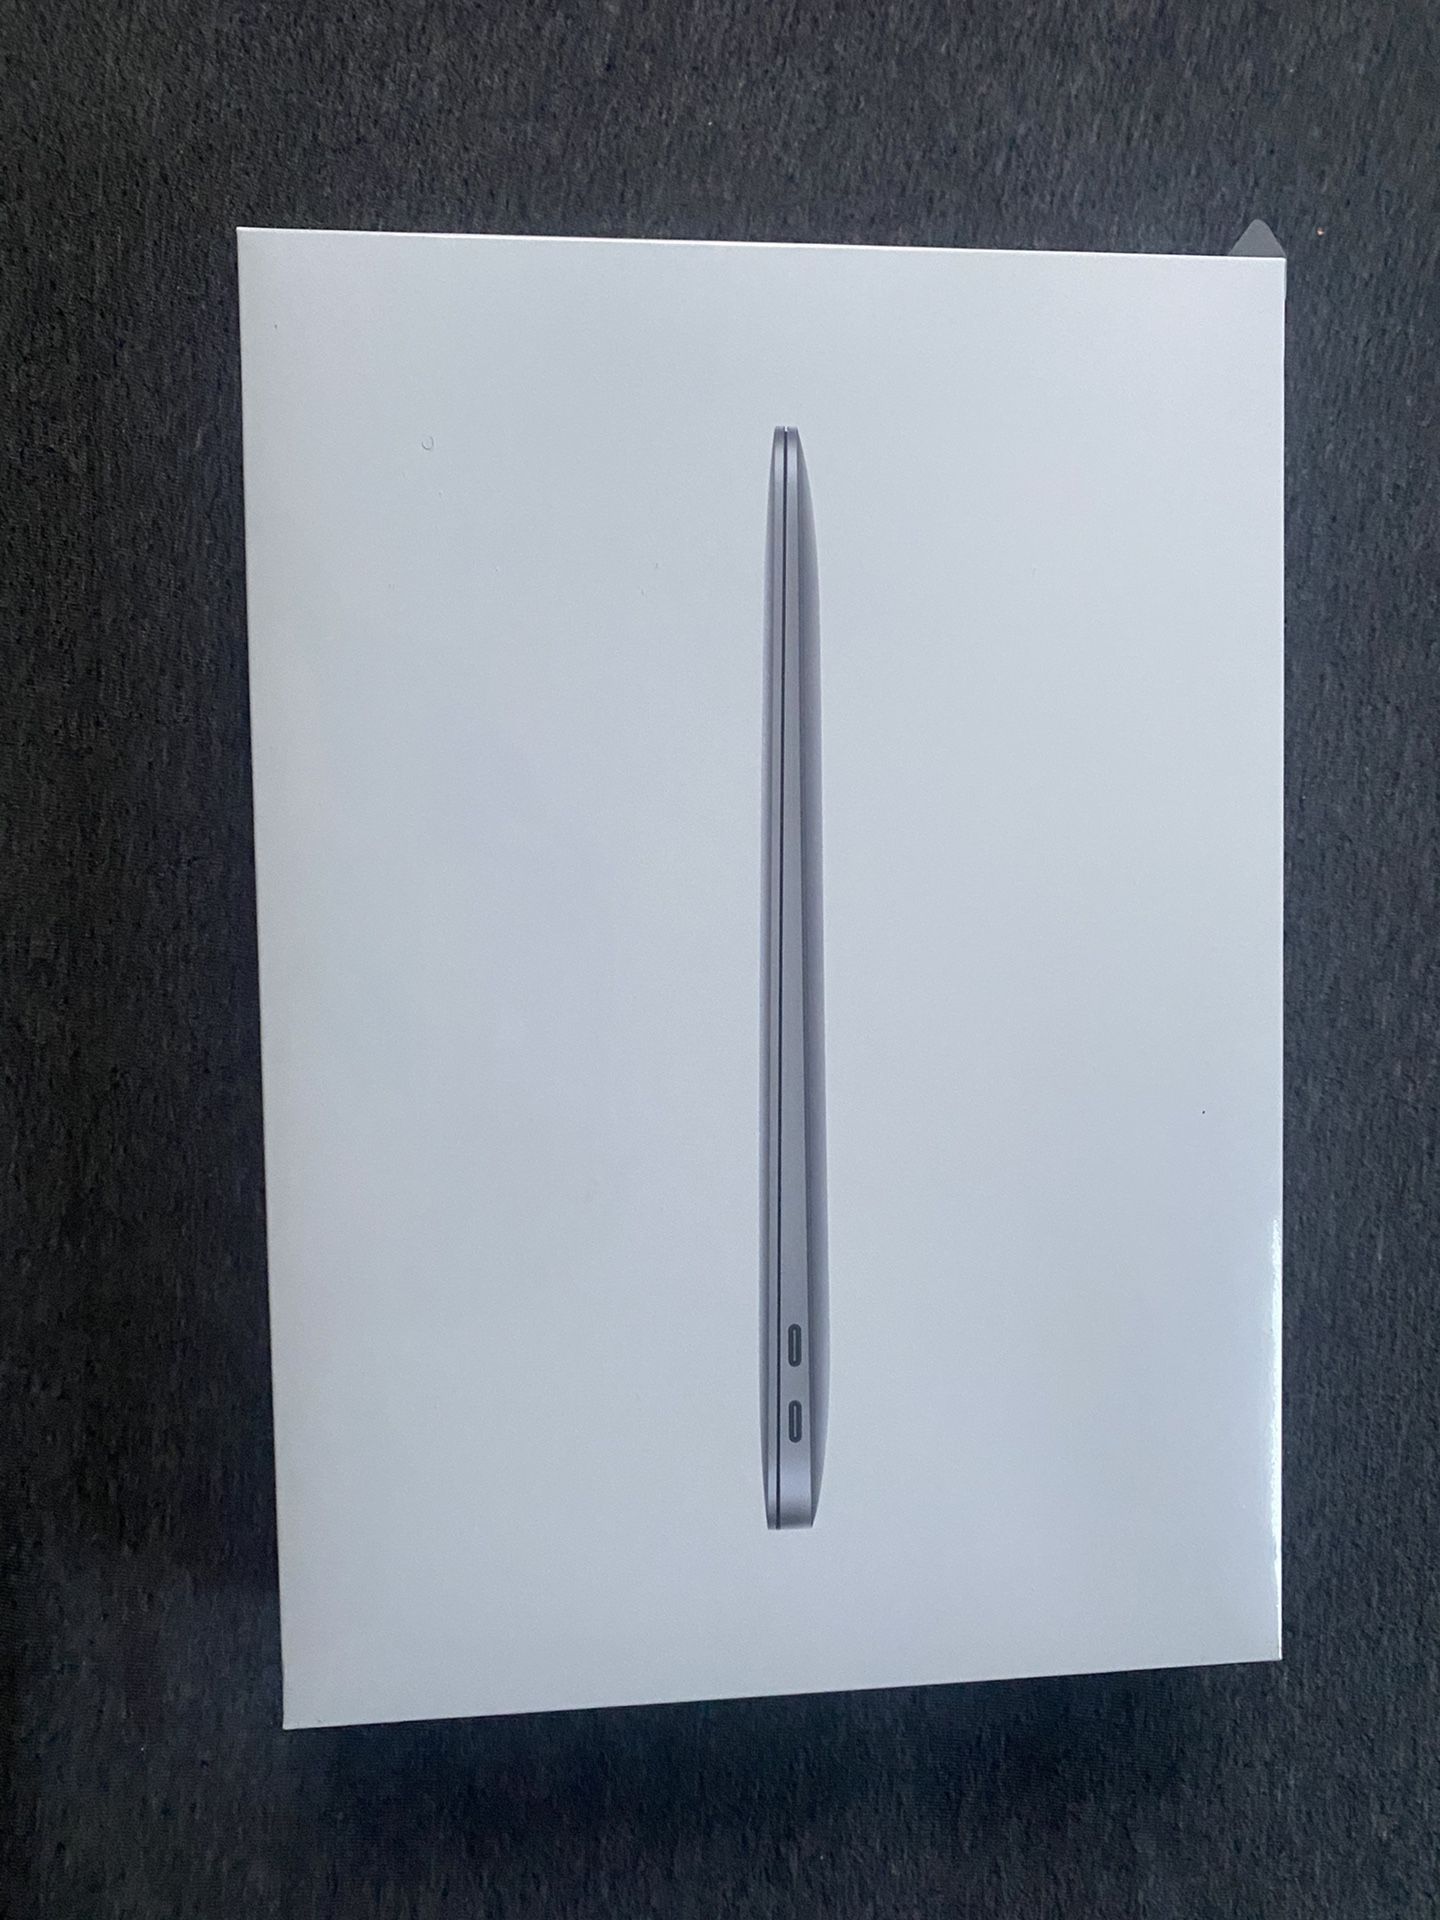 New Apple MacBook Air 13" - Intel Core i3 - 8GB Memory - 256GB SSD - Space Gray